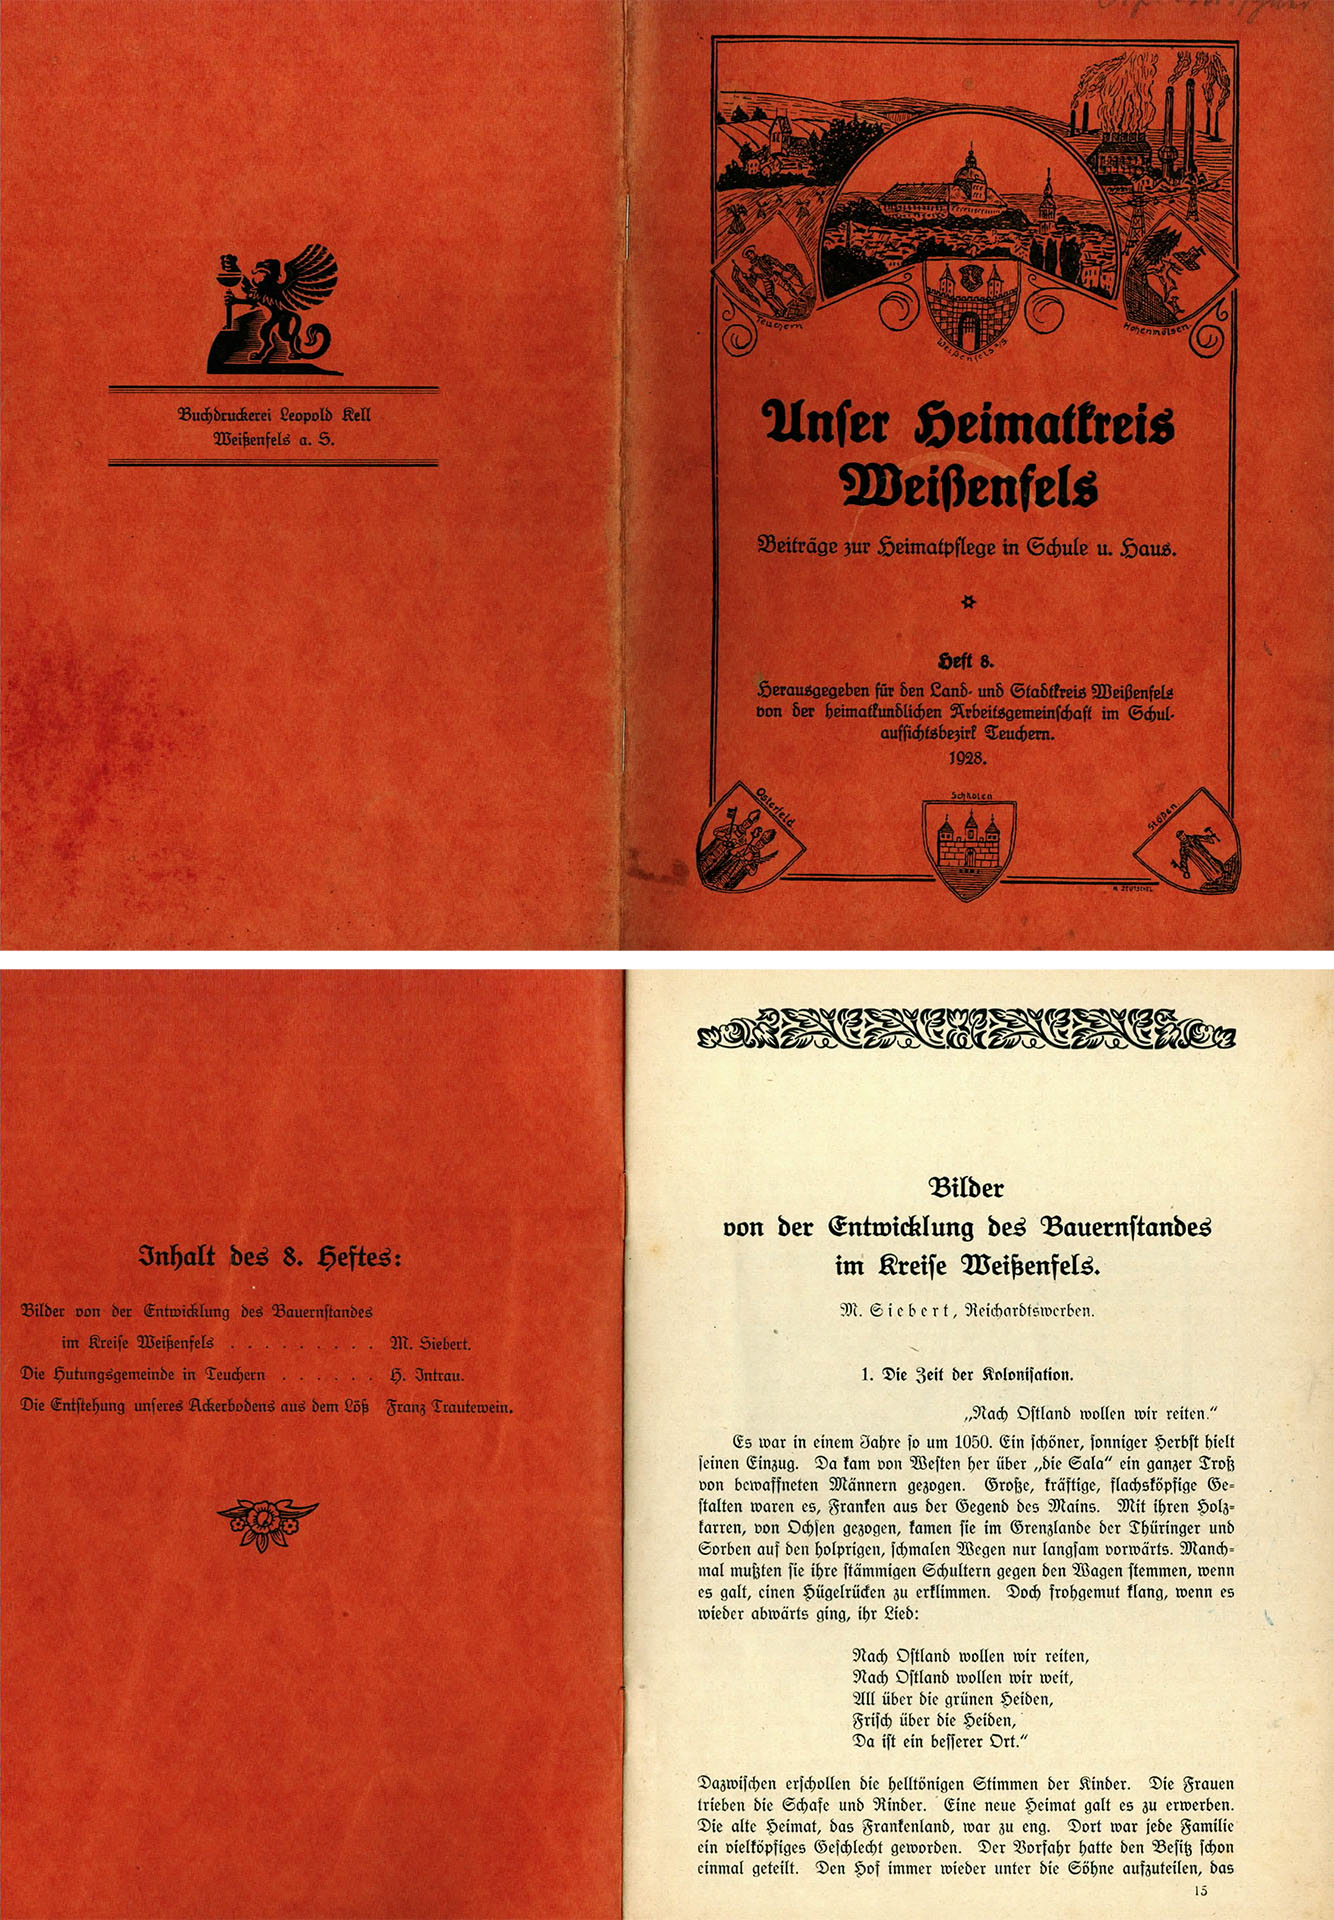 Unser Heimatkreis Weißenfels - Heft 8 / 1928 - Beiträge zur Heimatpflege - Land- und Stadtkreis Weißenfels